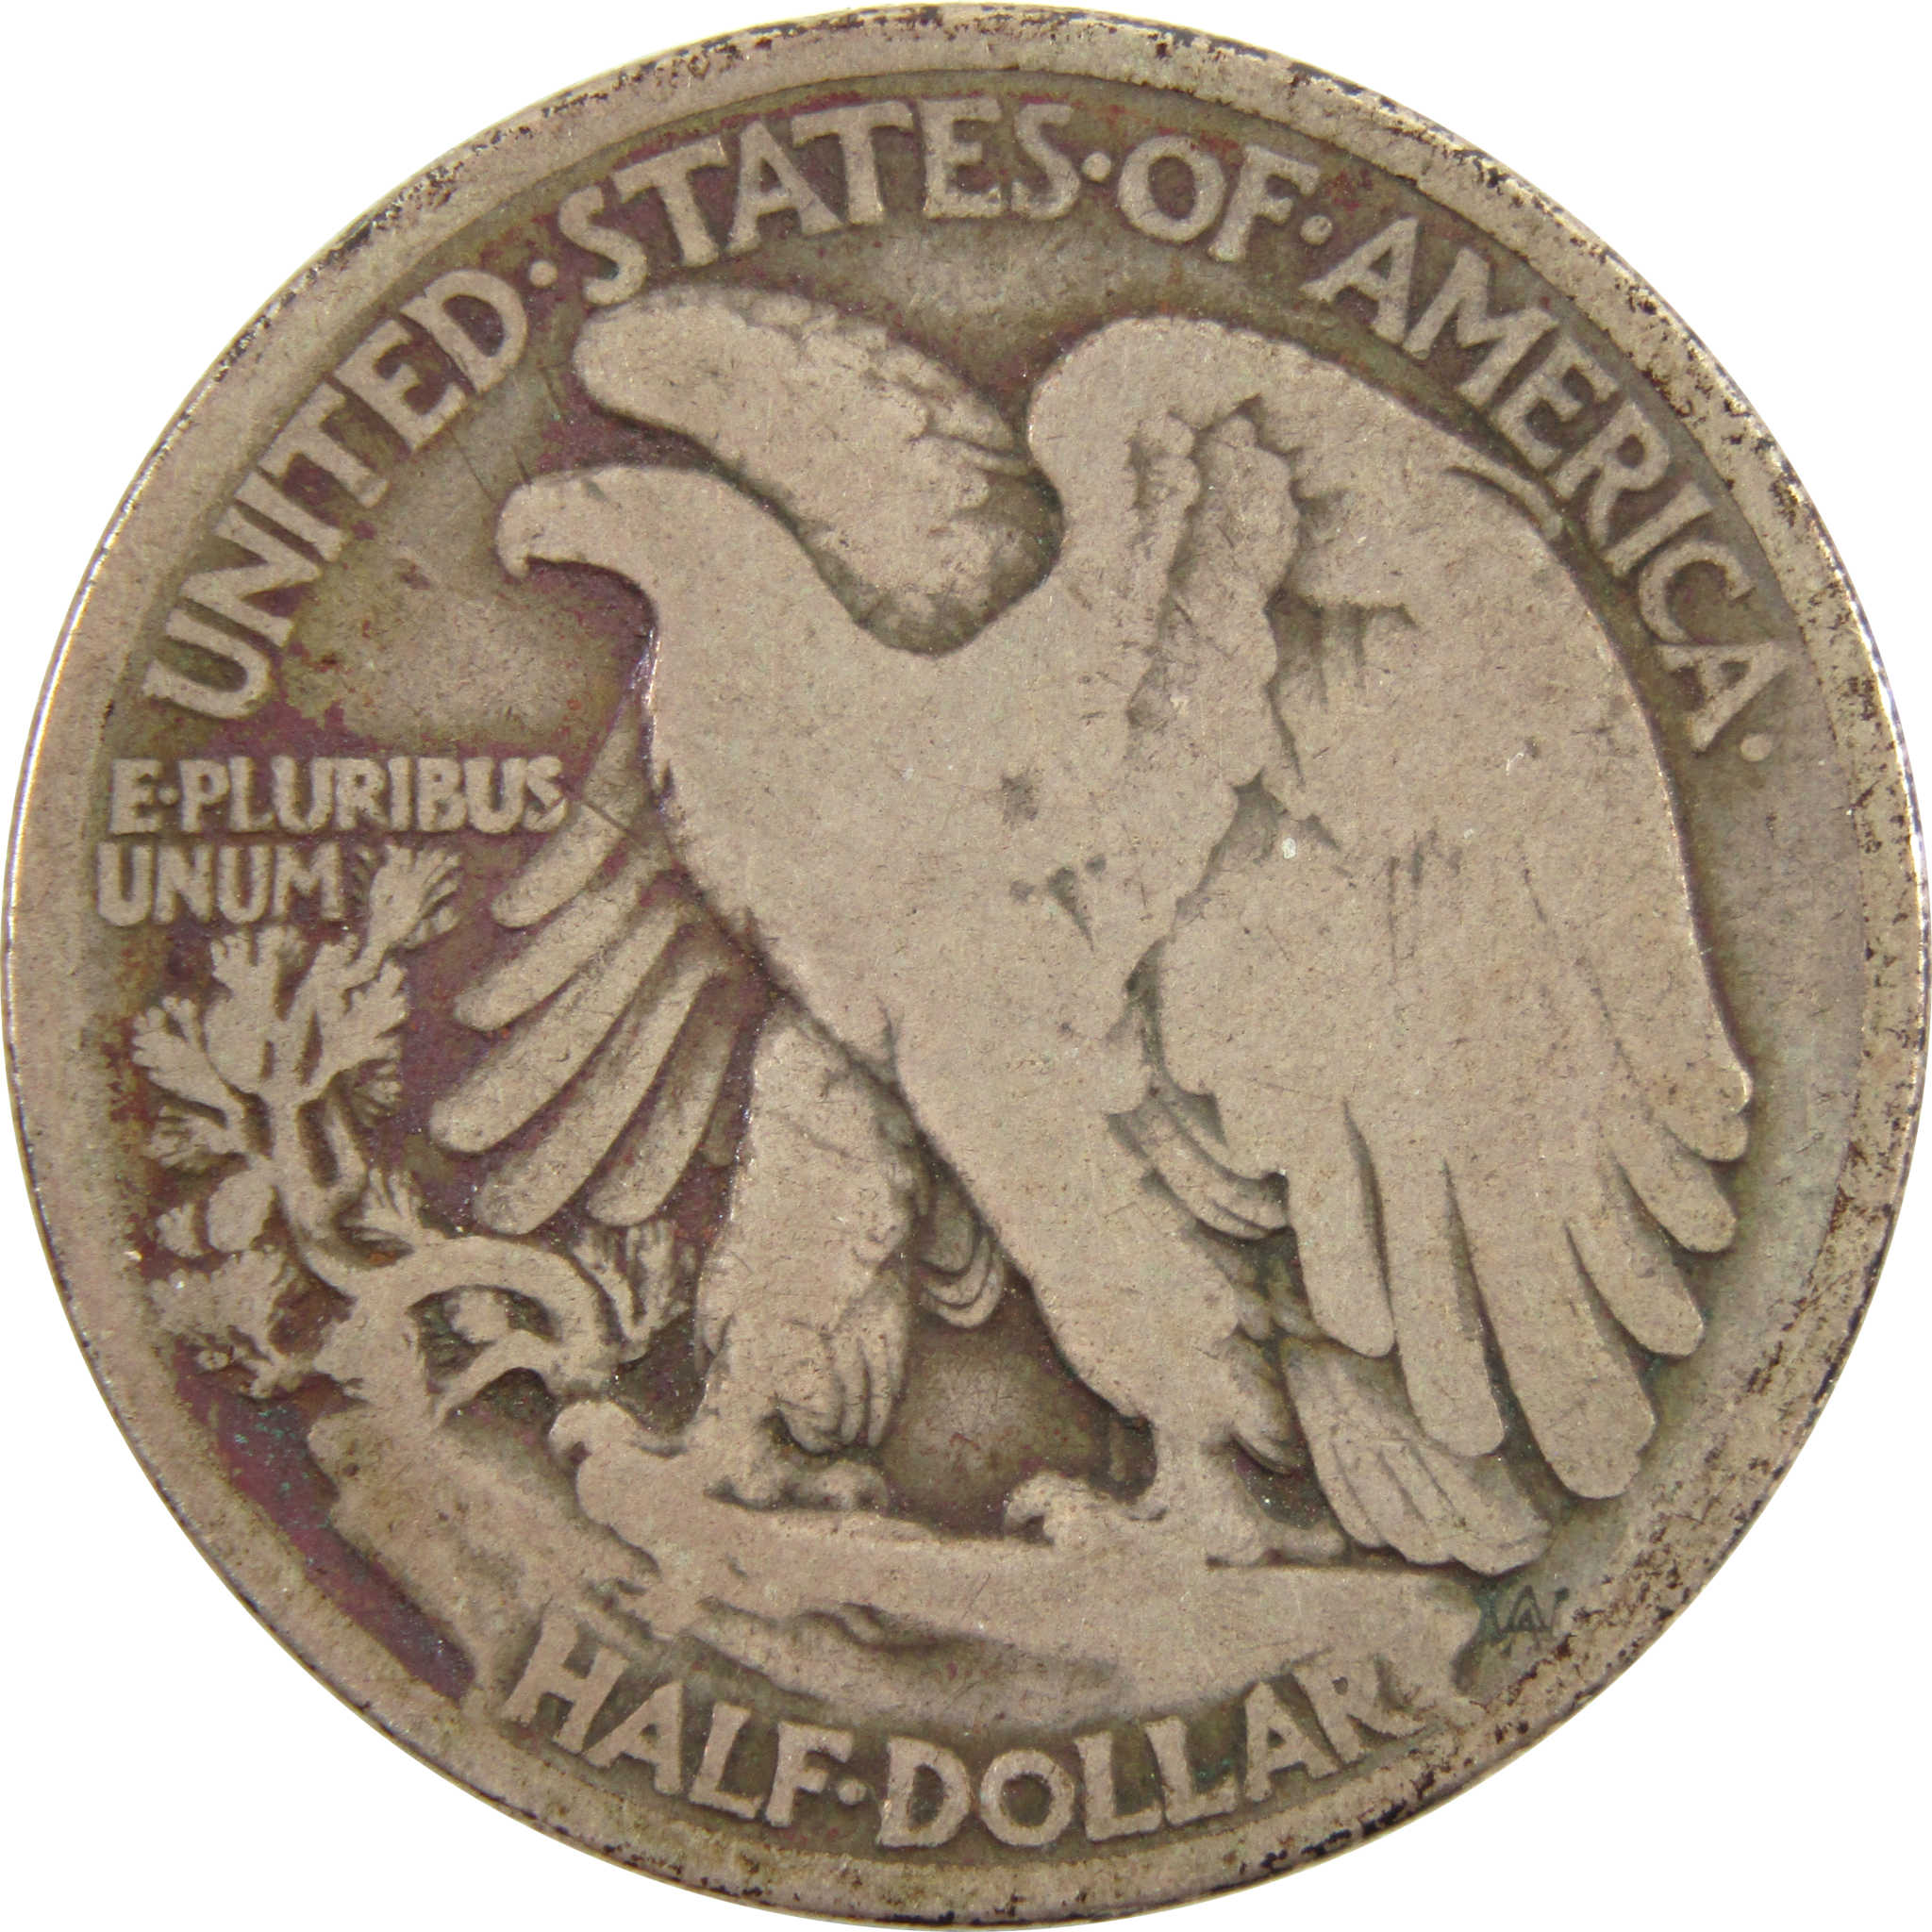 1919 Liberty Walking Half Dollar VG 90% Silver 50c SKU:I11075